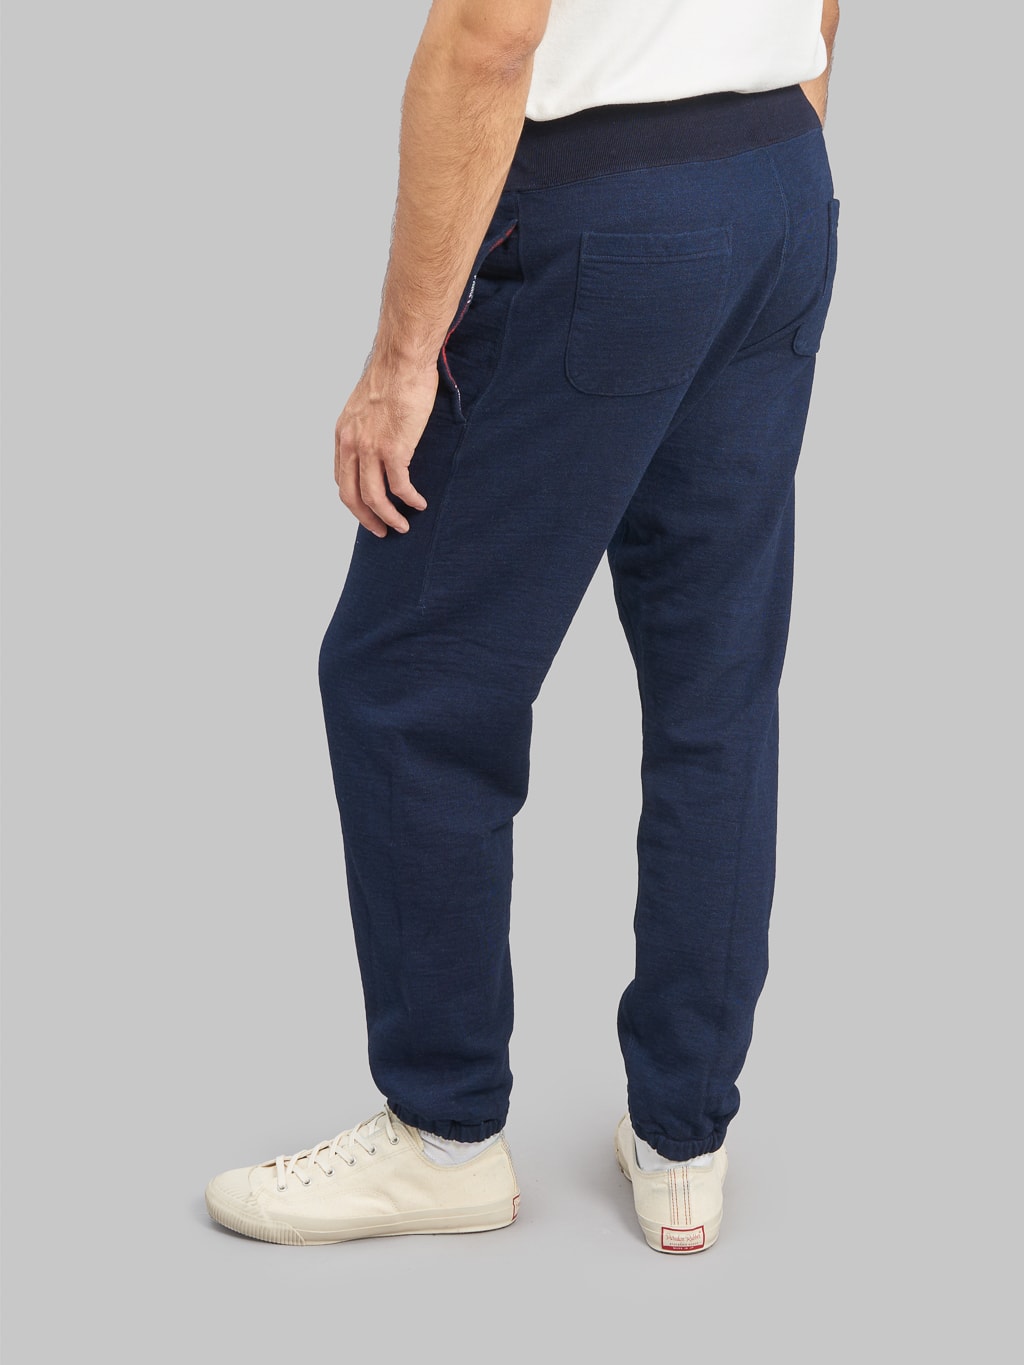 ues sweat pants indigo cotton model fitting